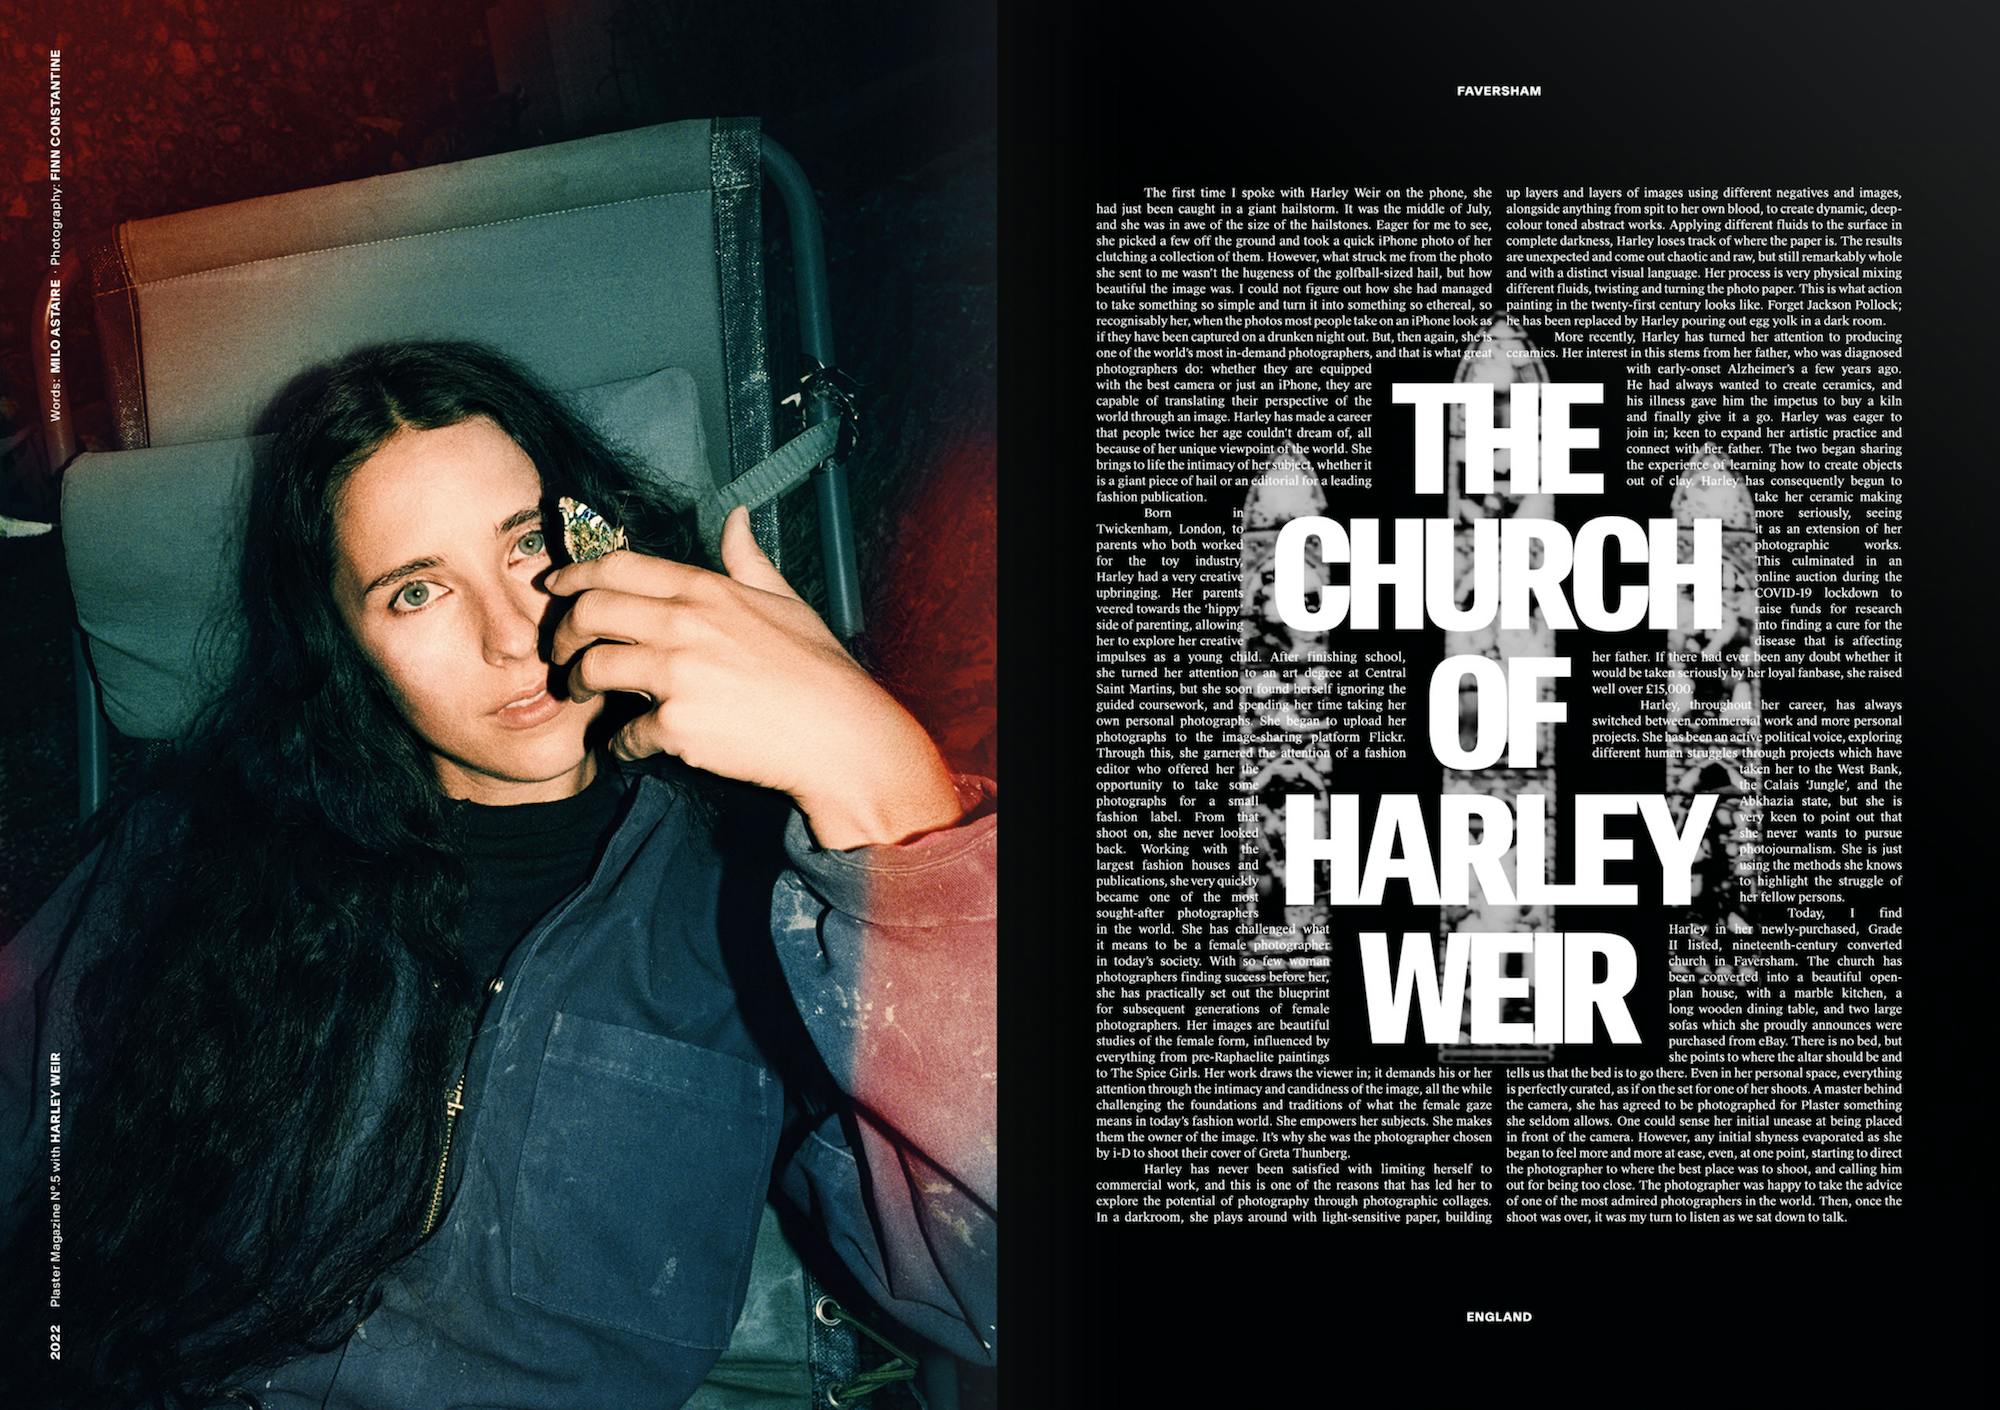 Harley Weir for Plaster No. 5, magazine spread